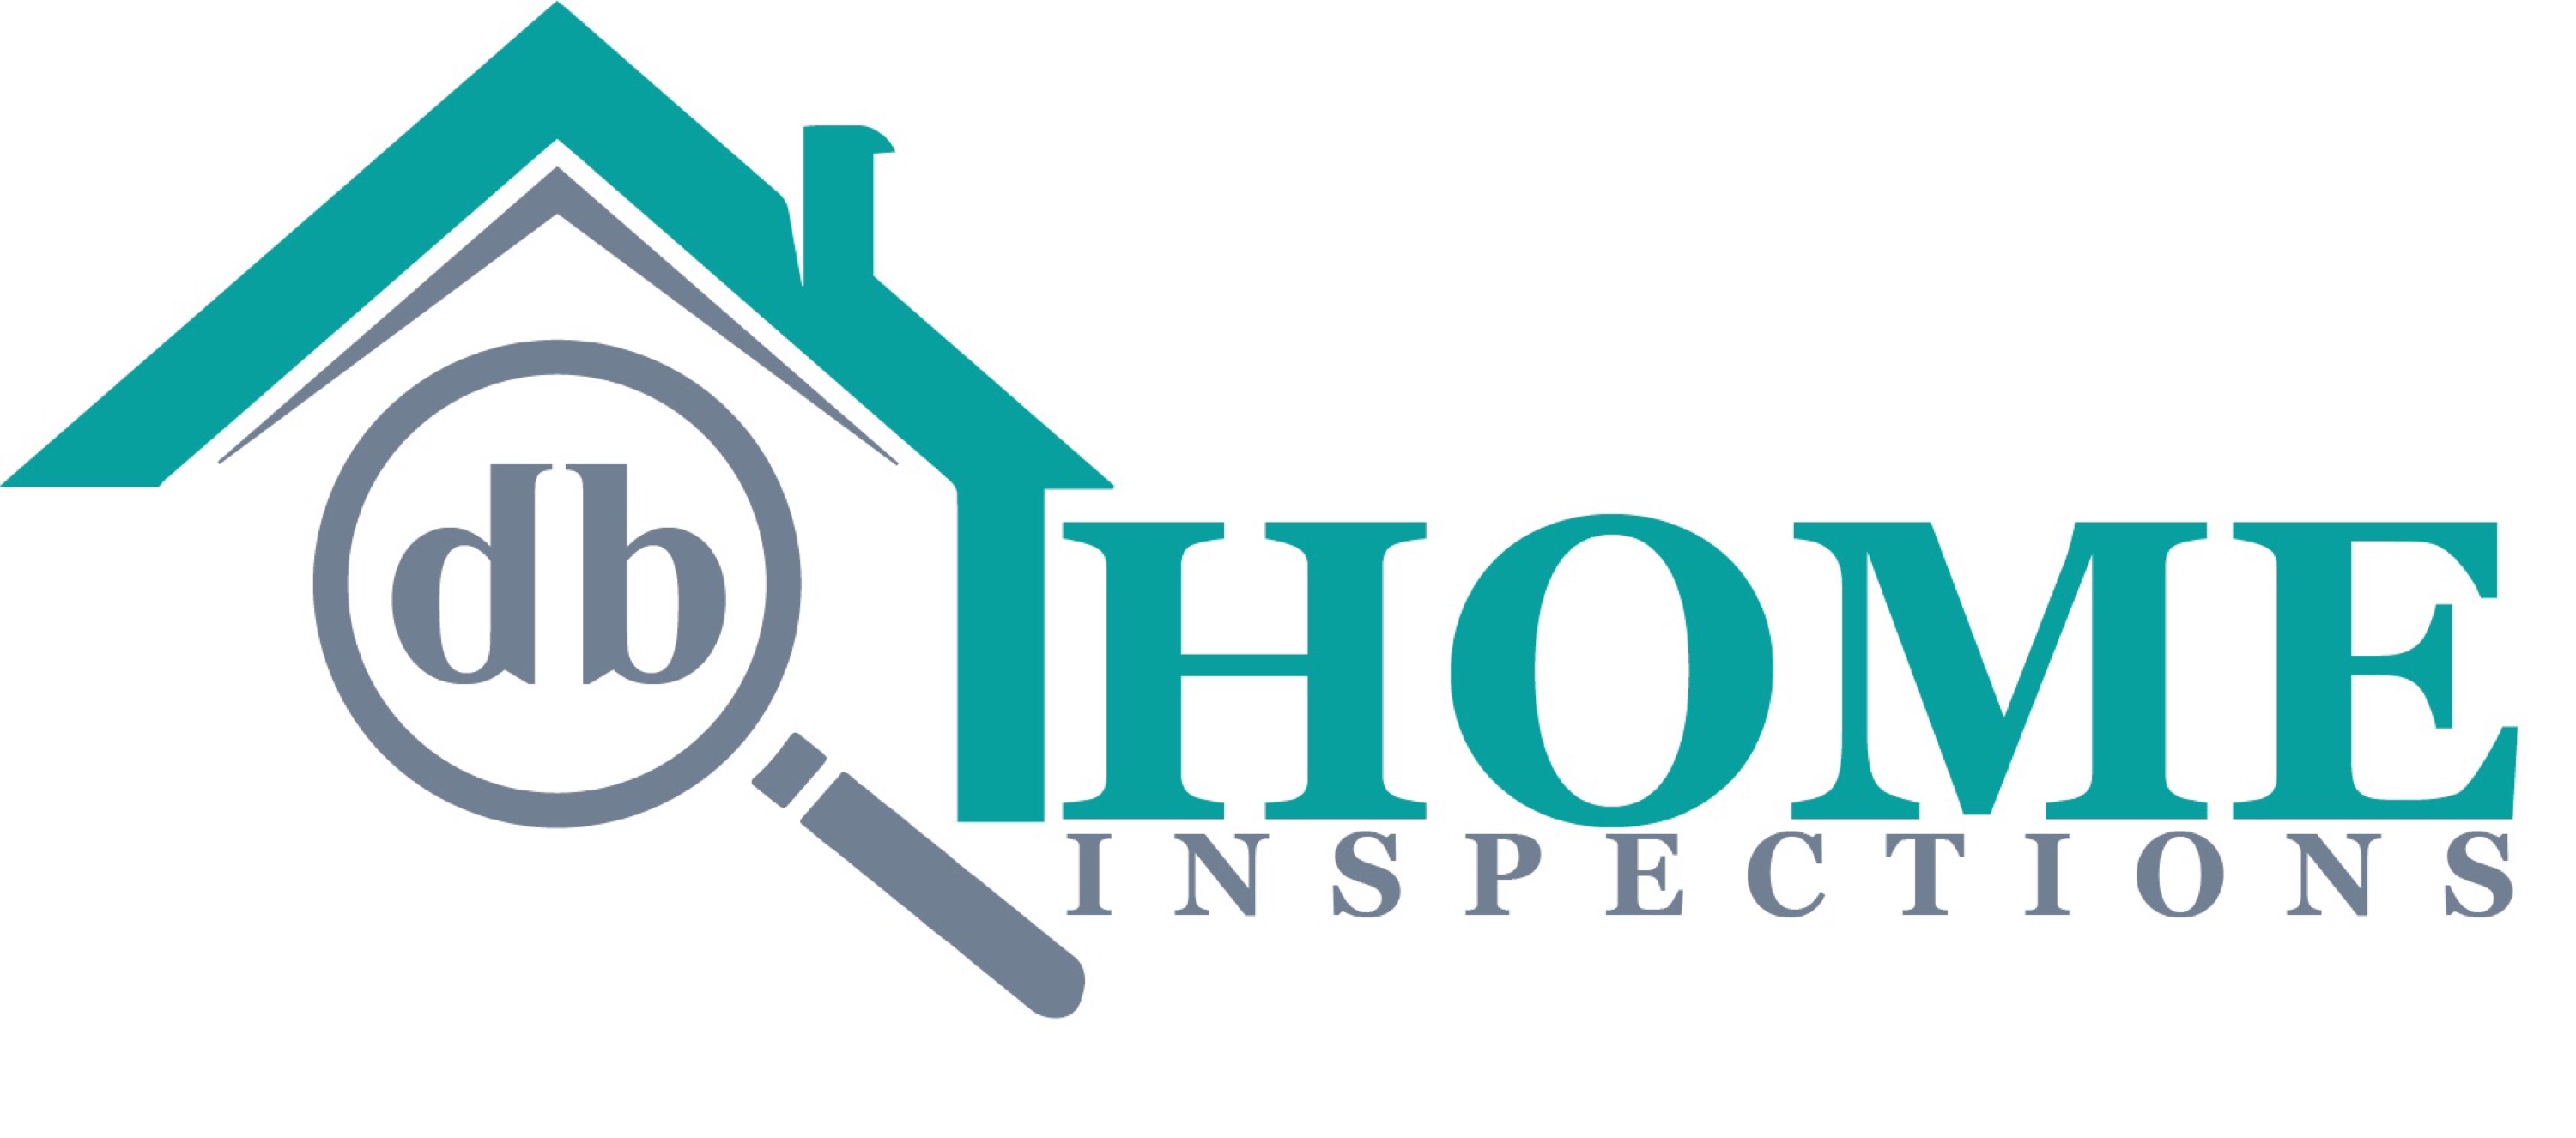 DB Home Inspections, LLC Logo